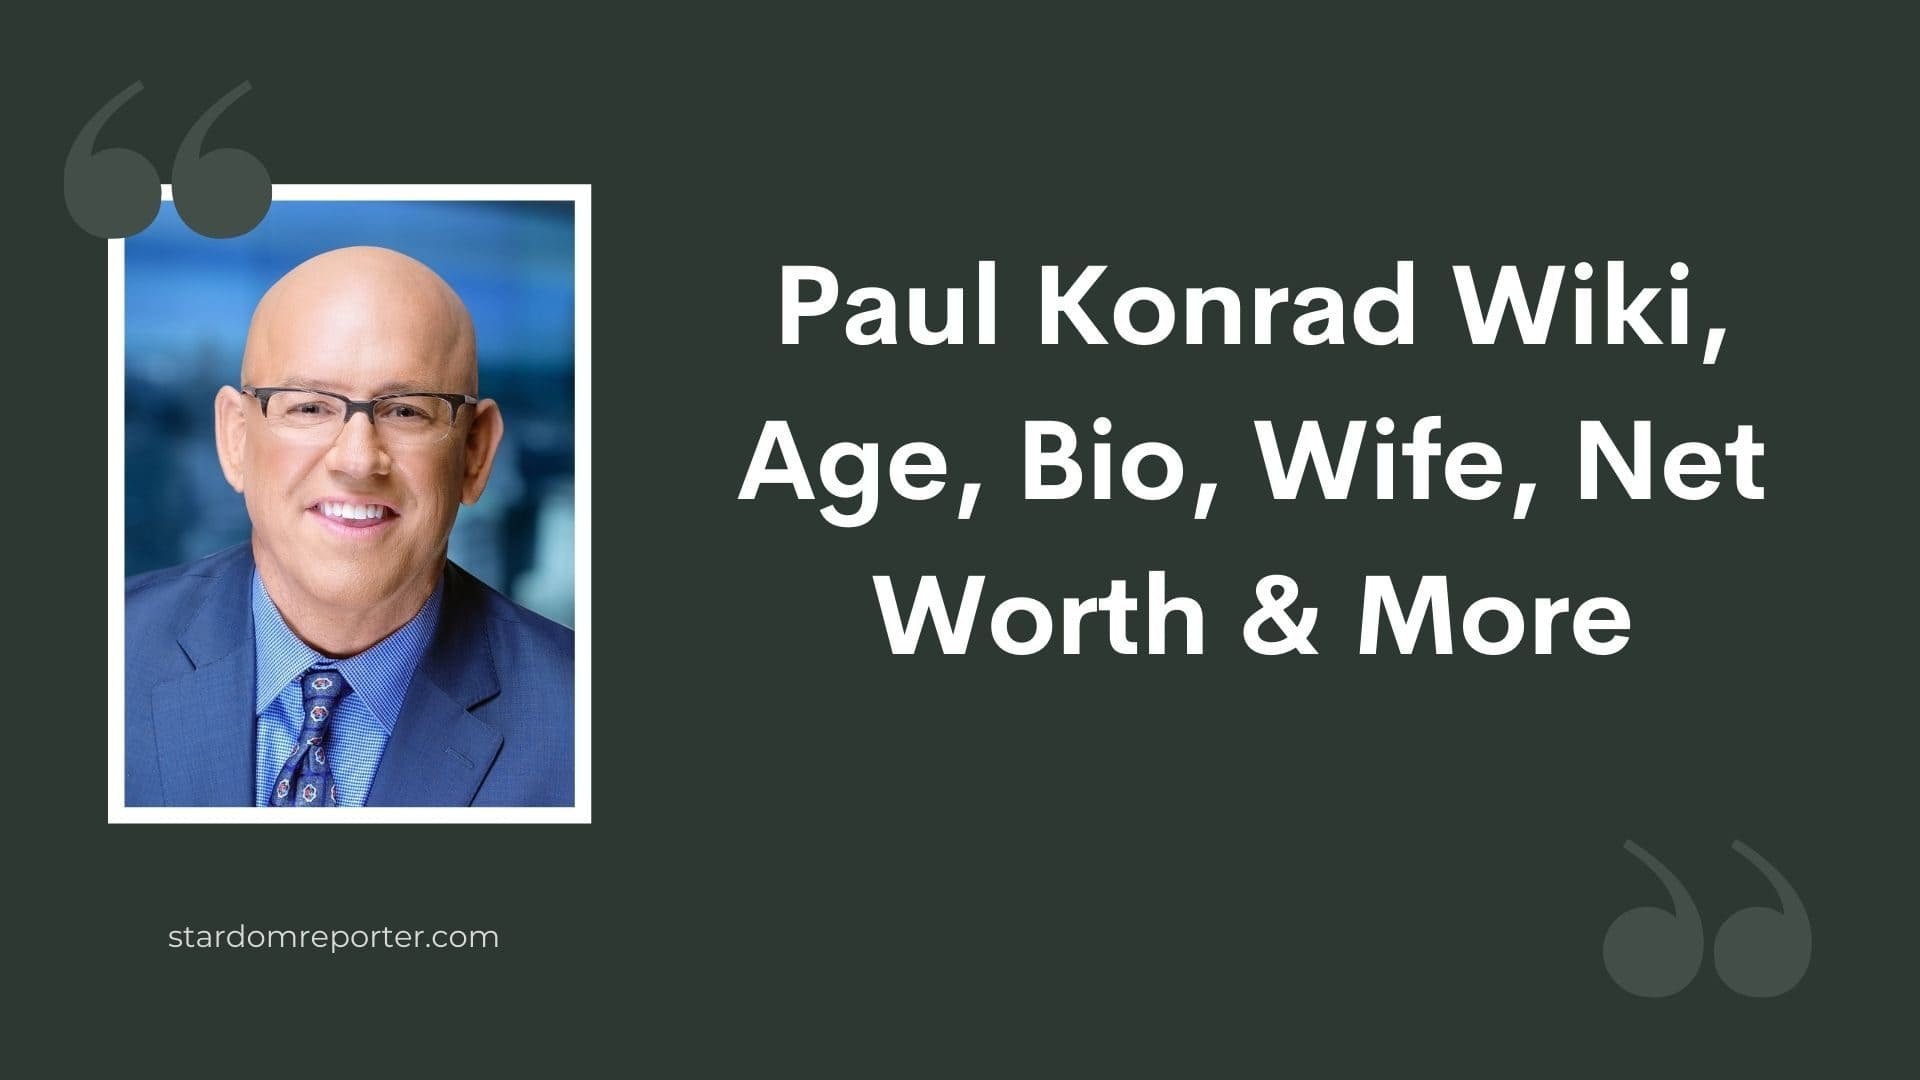 Paul Konrad Wiki, Age, Bio, Wife, Net Worth & More - 21